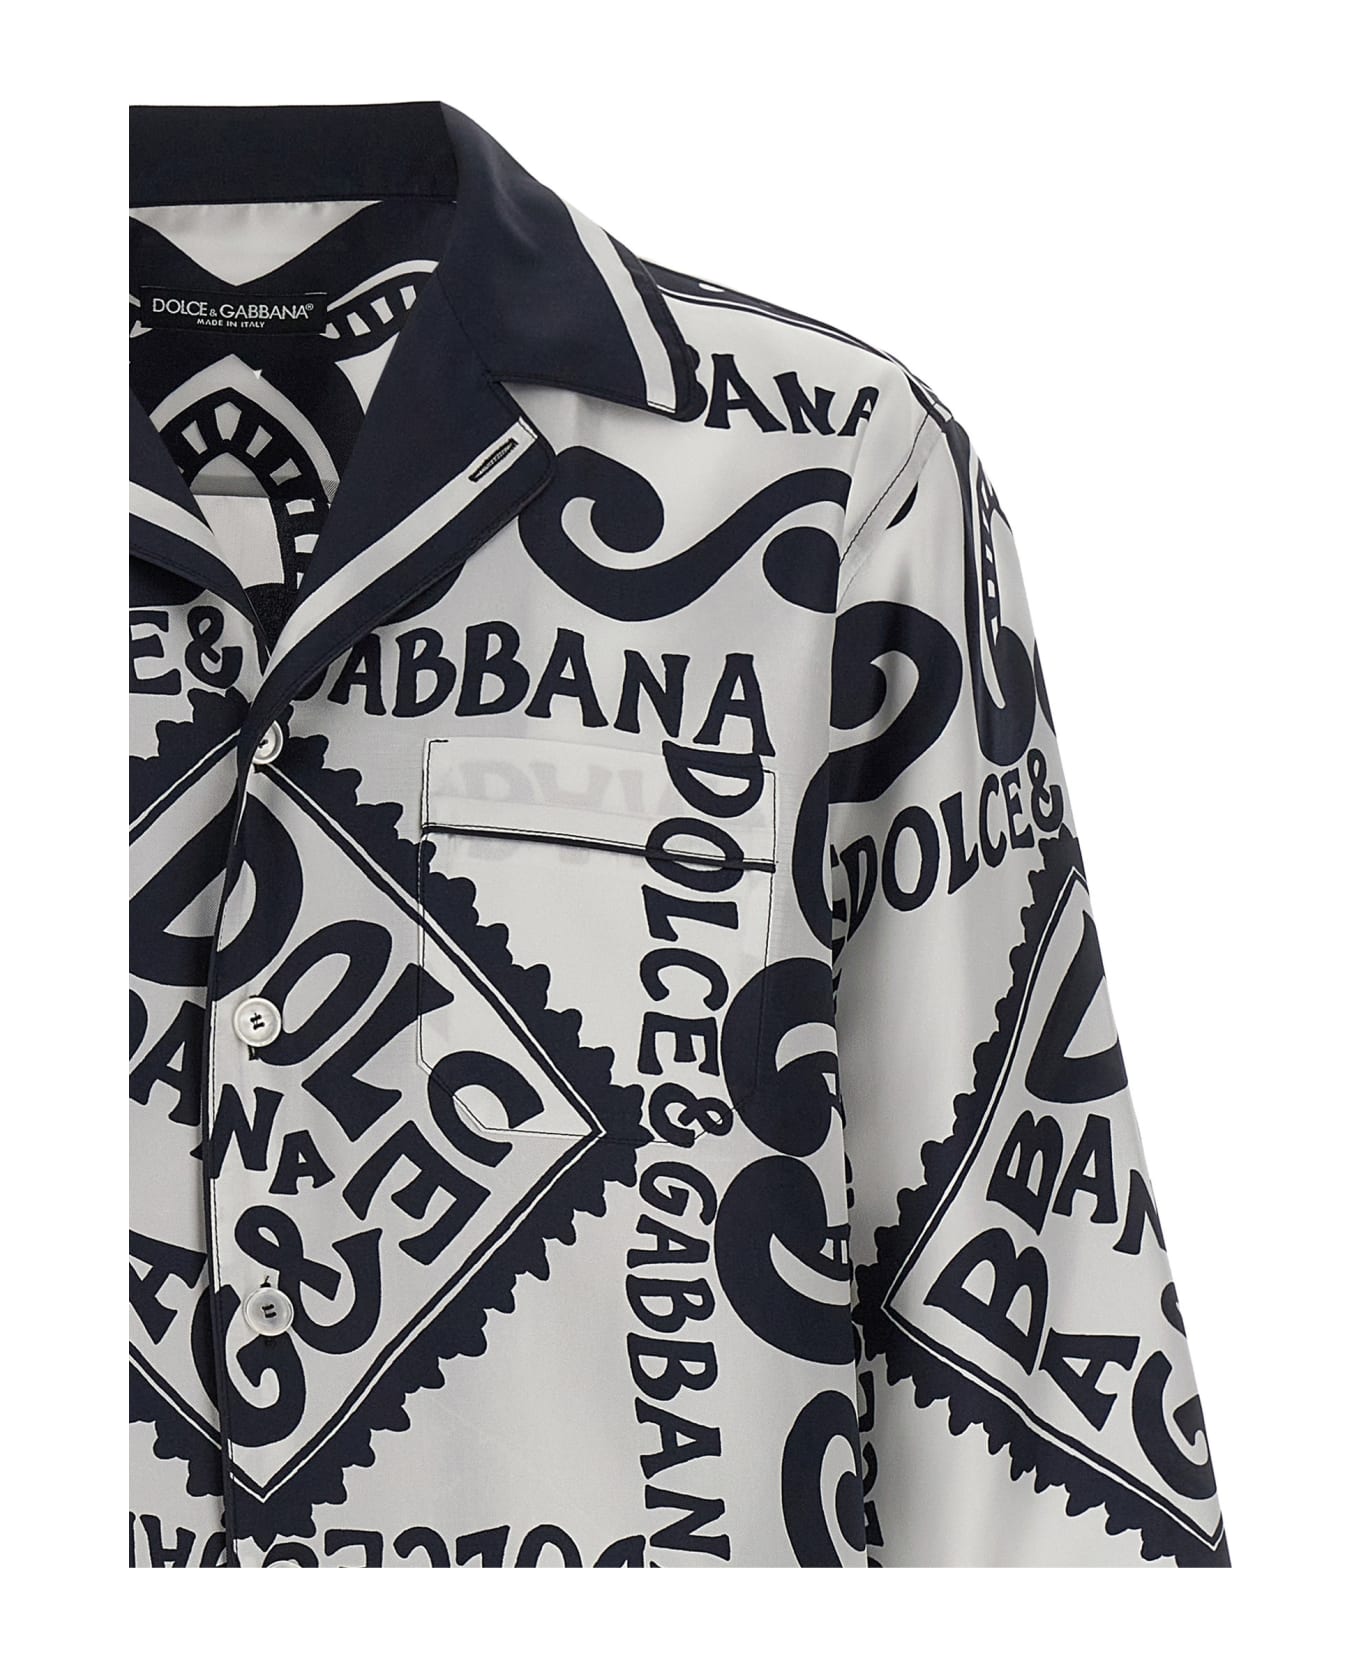 Dolce & Gabbana 'marina' Shirt - White/Black シャツ